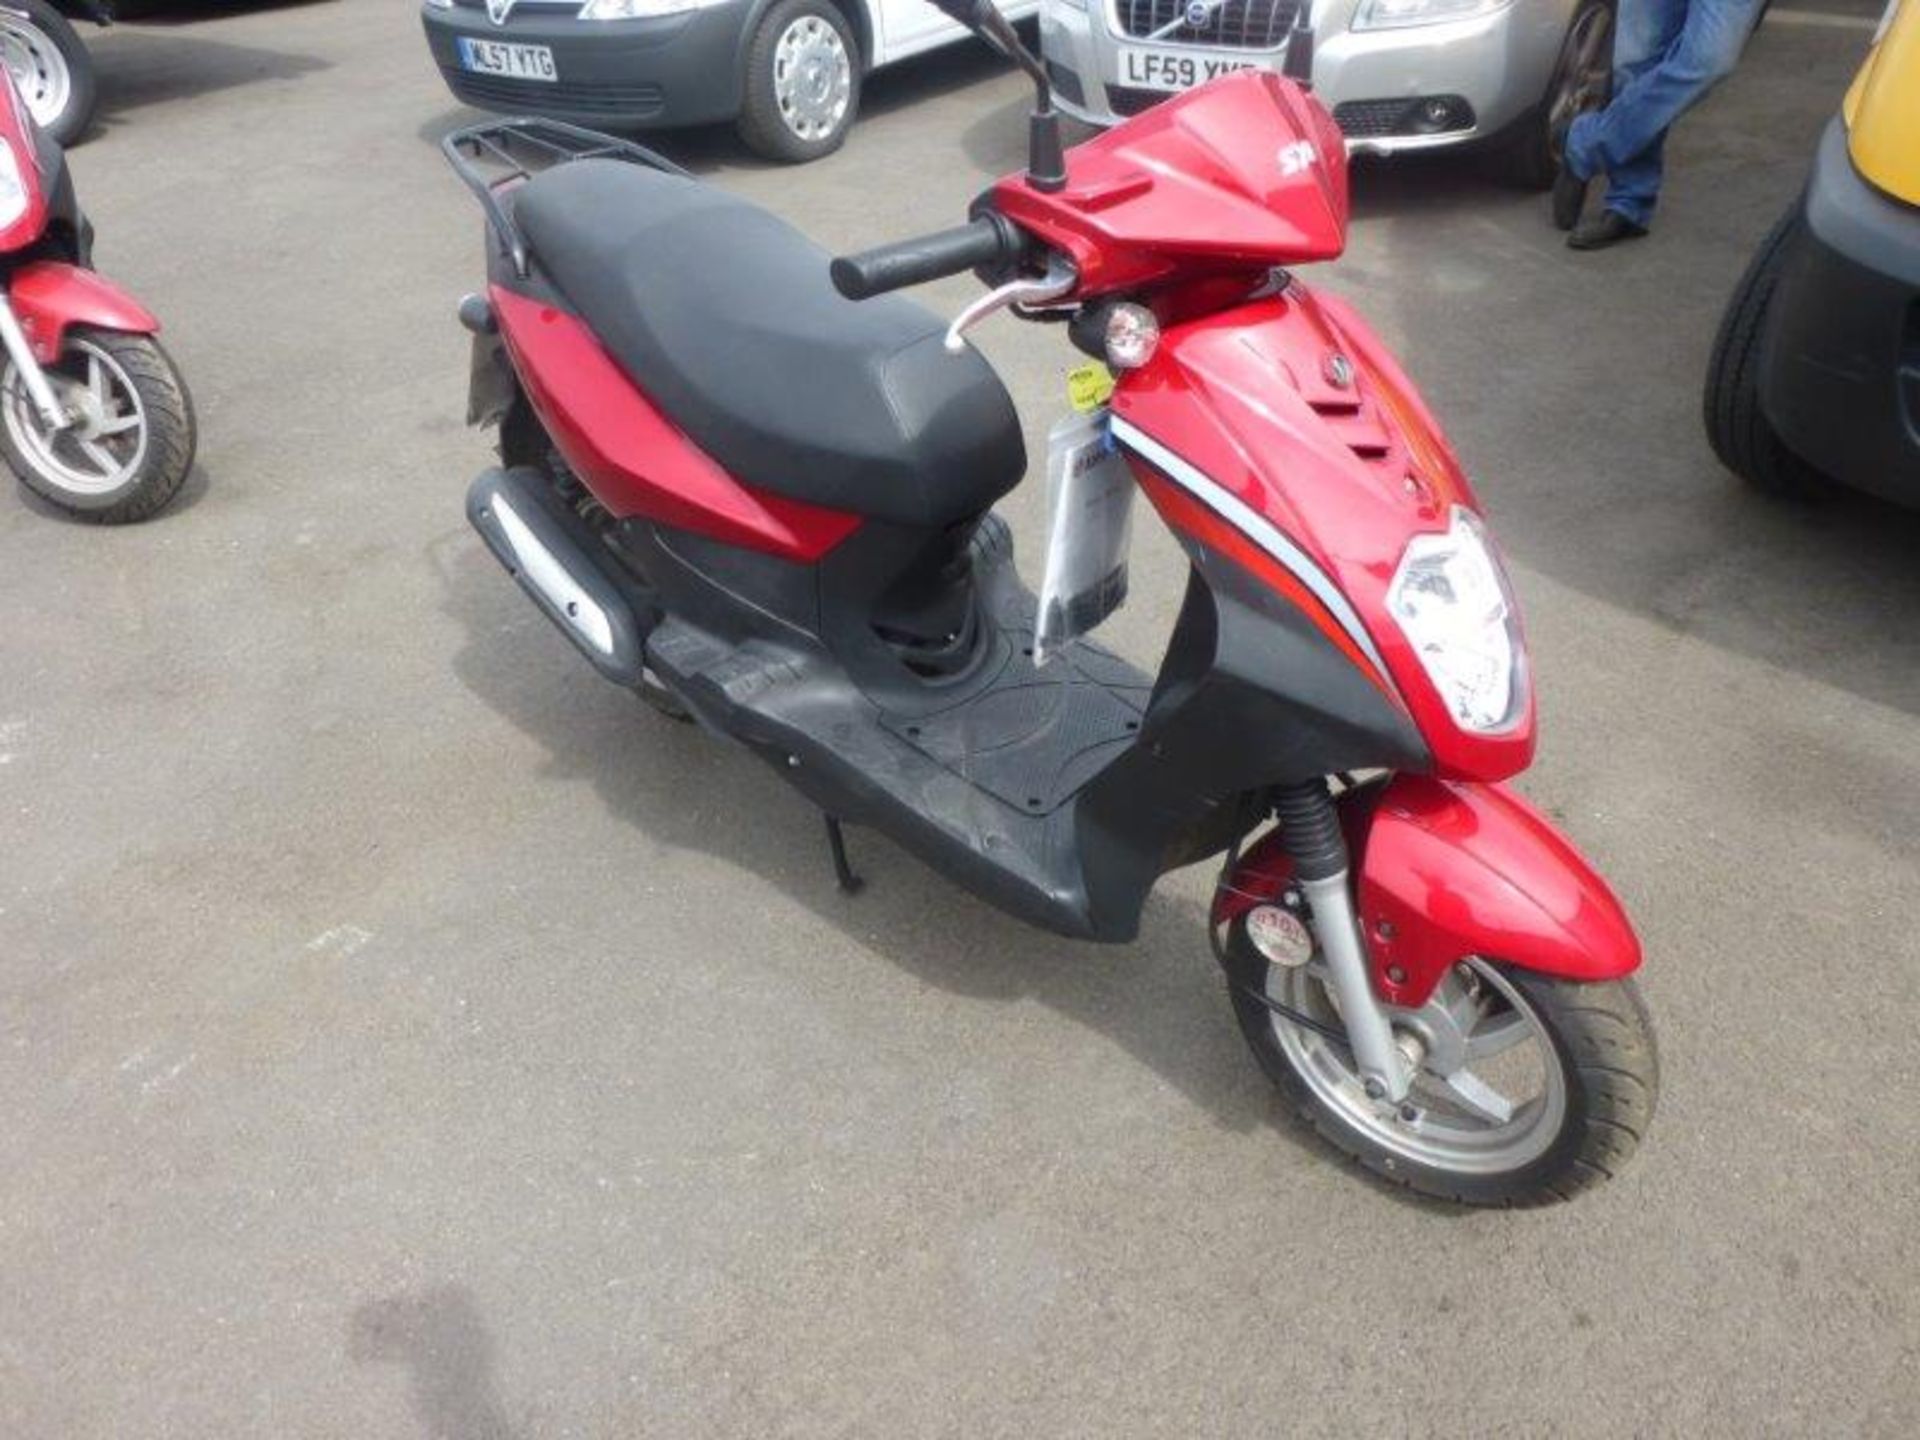 Sym Symply50 AV05W-6 moped, 49cc (Red)  Registration no. MJ63 RXW  Date of registration: 19/11/2013